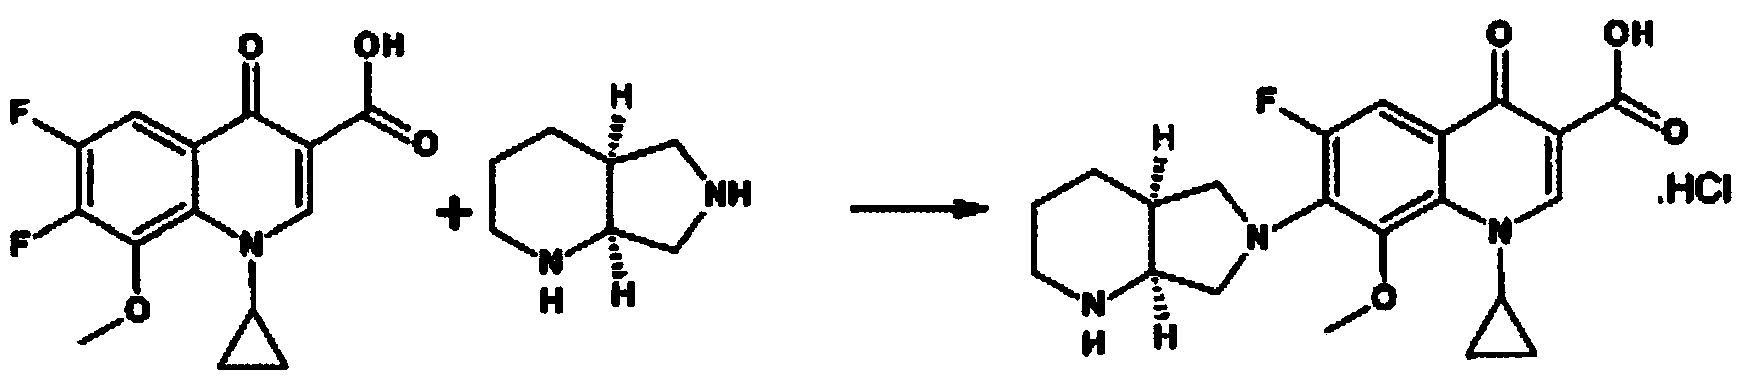 Novel preparation method of moxifloxacin hydrochloride